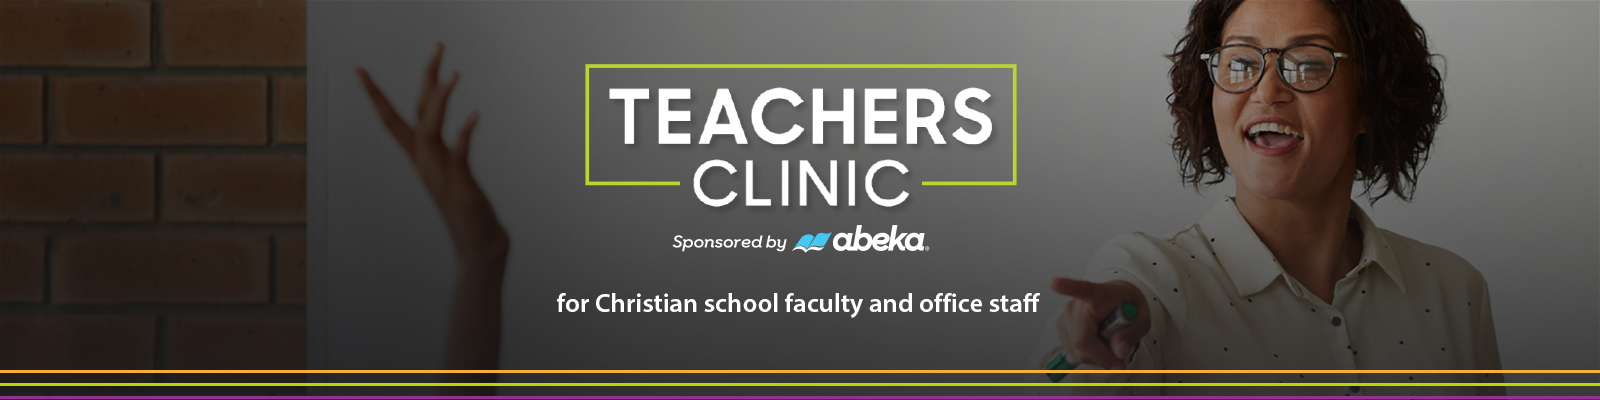 Teachers Clinic Sponsored by Abeka